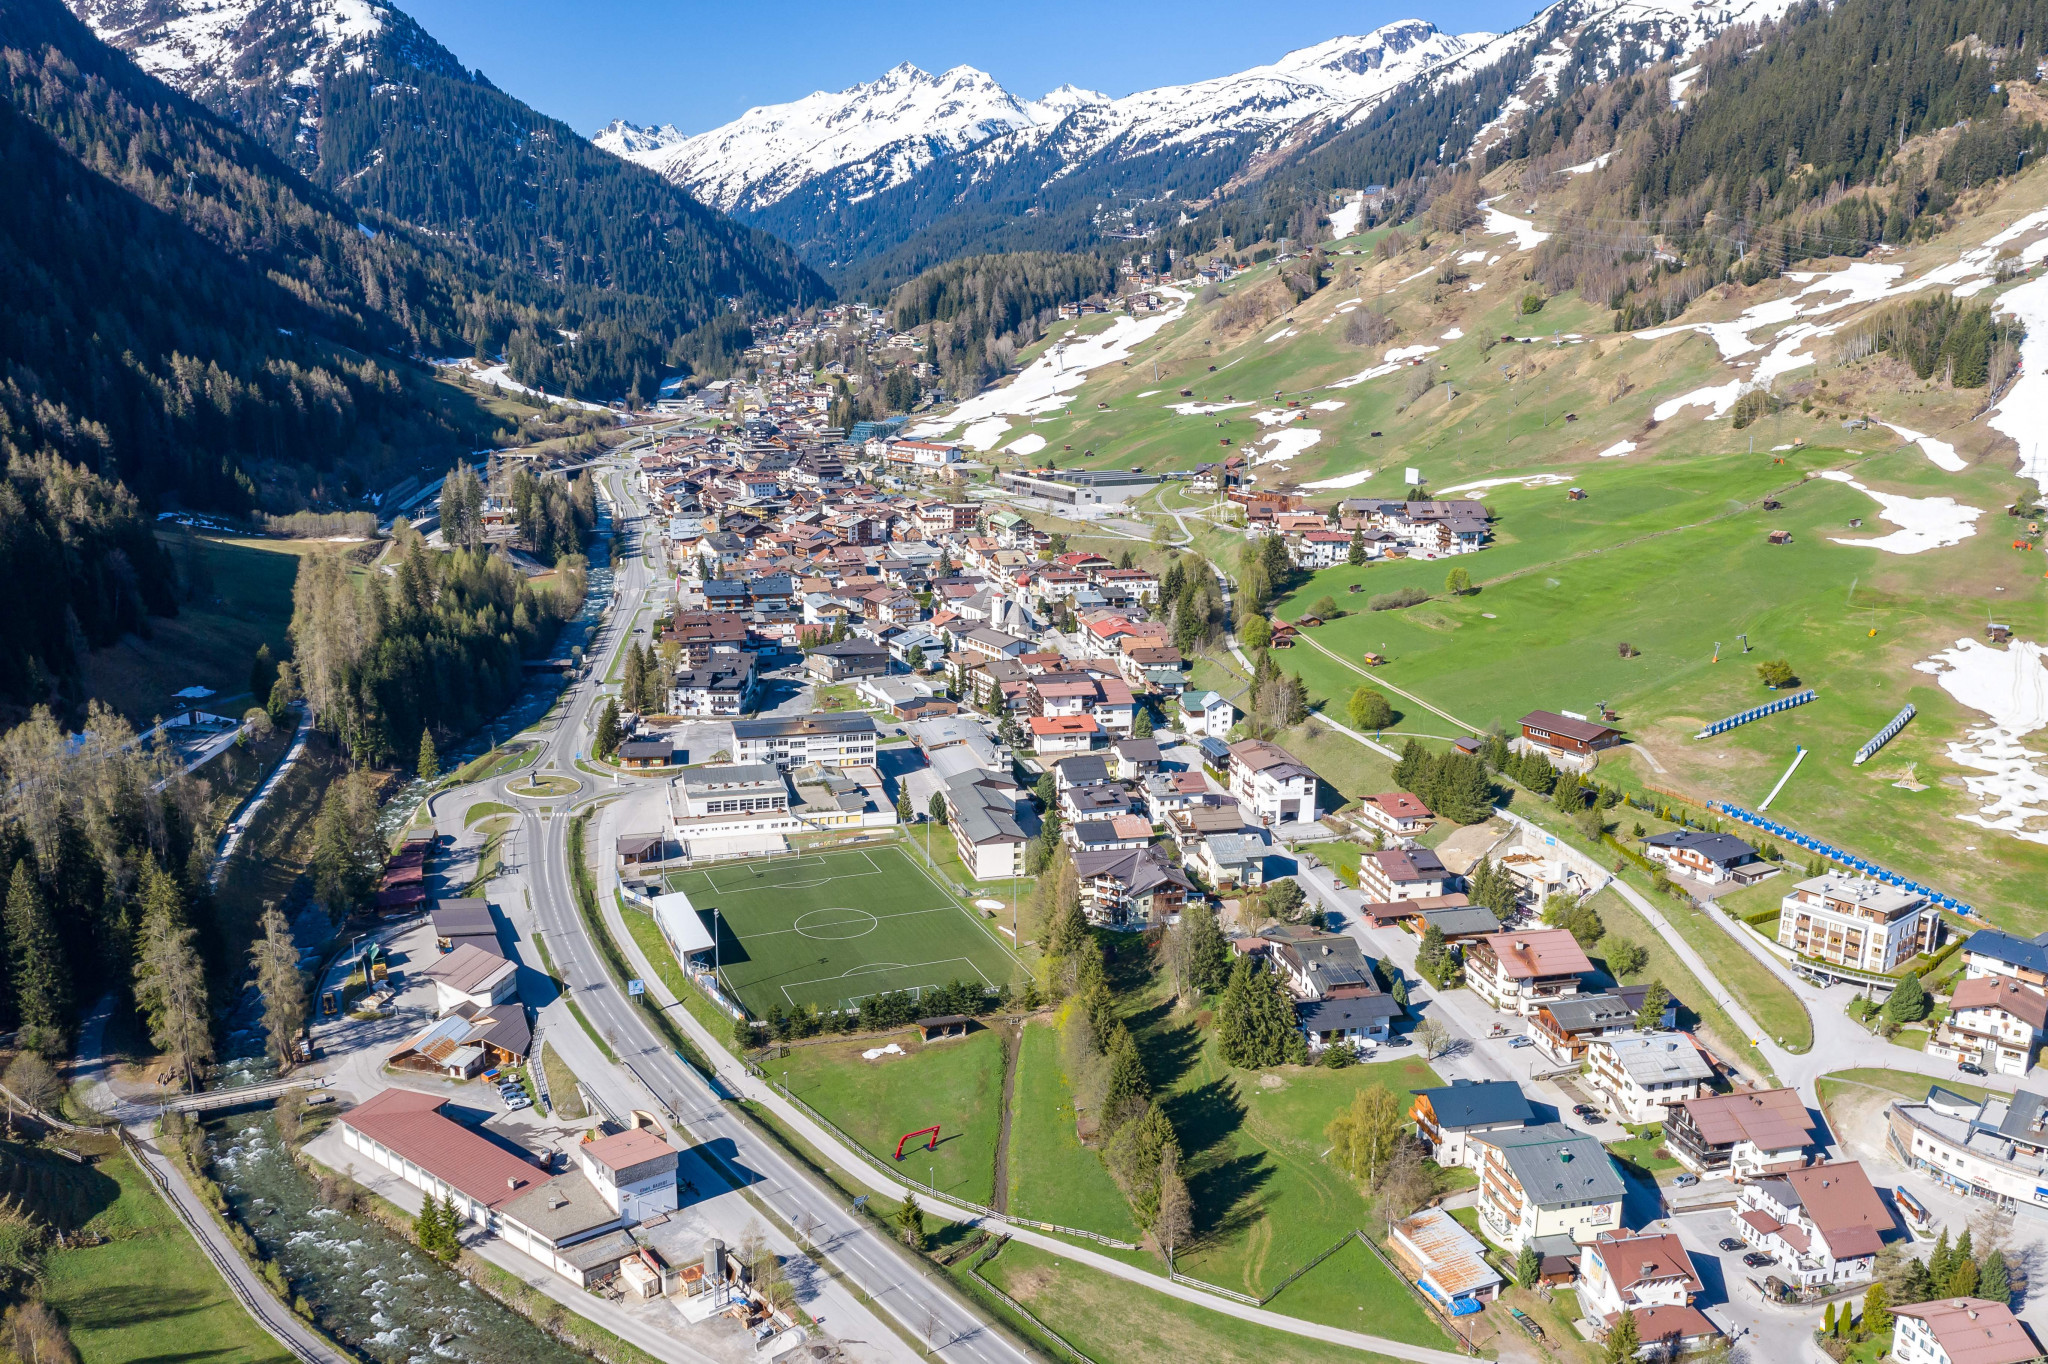 Saint Anton am Arlberg is hosting the World Junior Alpine Skiing Championships next year ©Getty Images